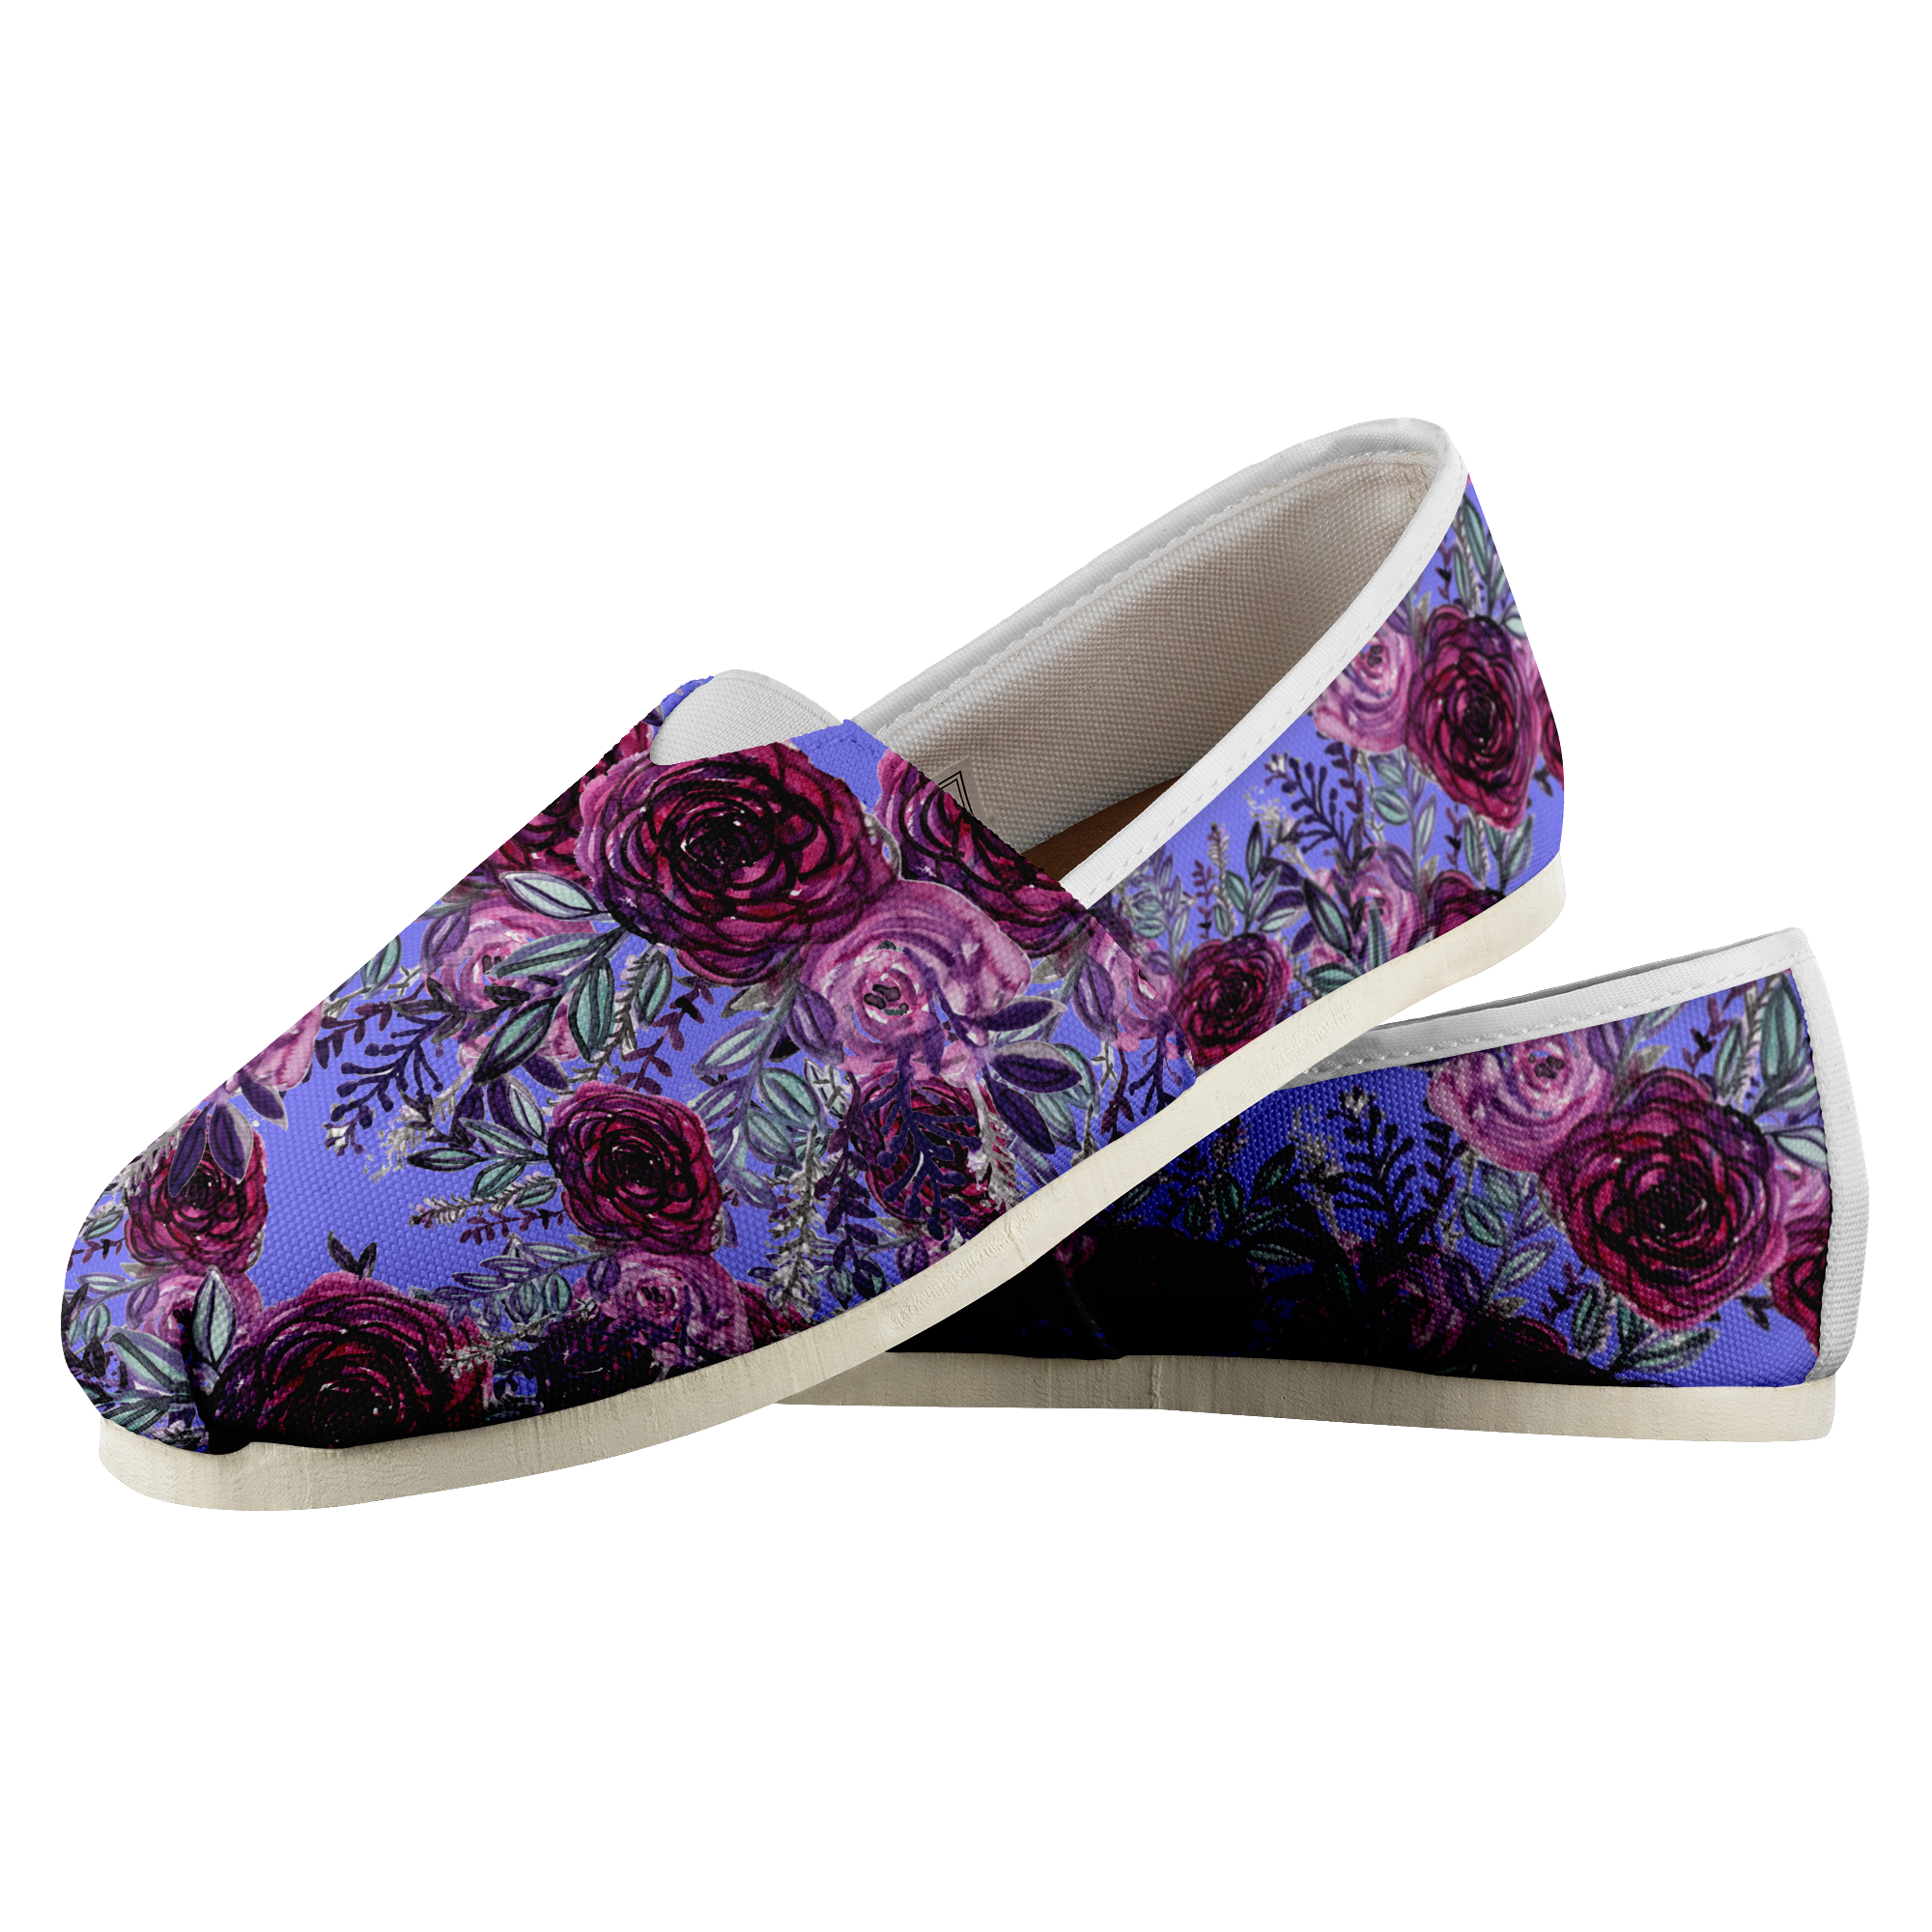 Purple Rose Floral Print Women's Casual Slip on Sneakers Shoes (US Size: 4.5-14)-Slip-On Sneakers-Womens-US4.5-Heidi Kimura Art LLC